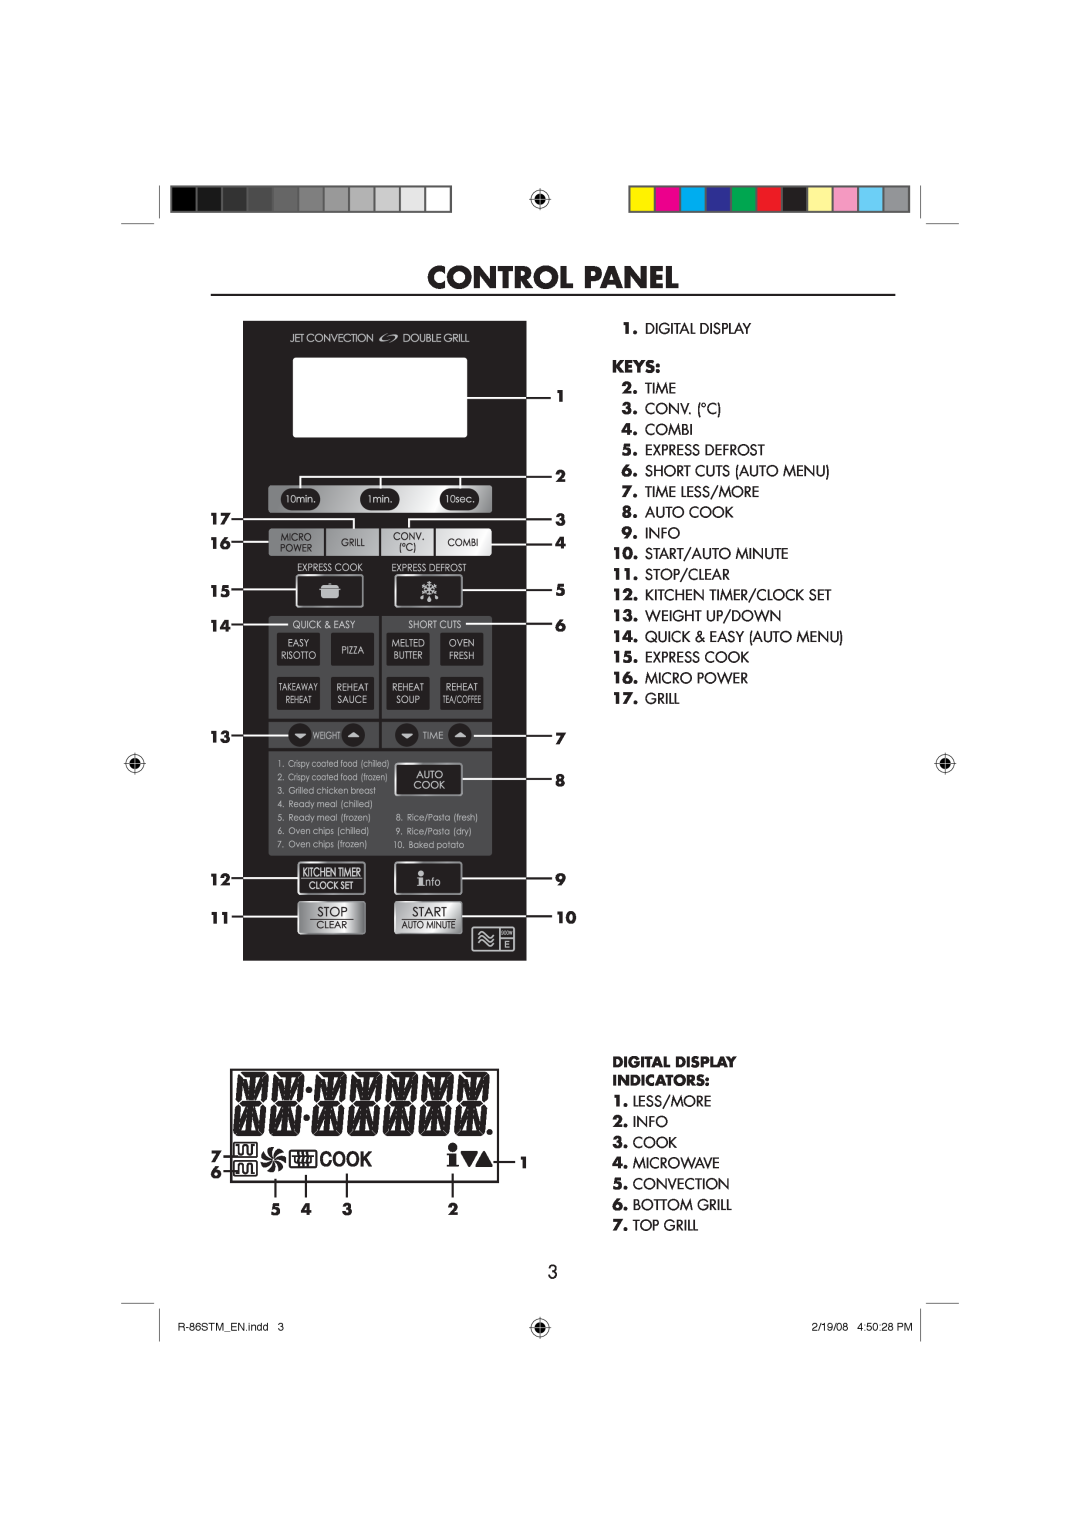 Sharp R-86STM manual Control Panel, Keys, Digital Display Indicators 